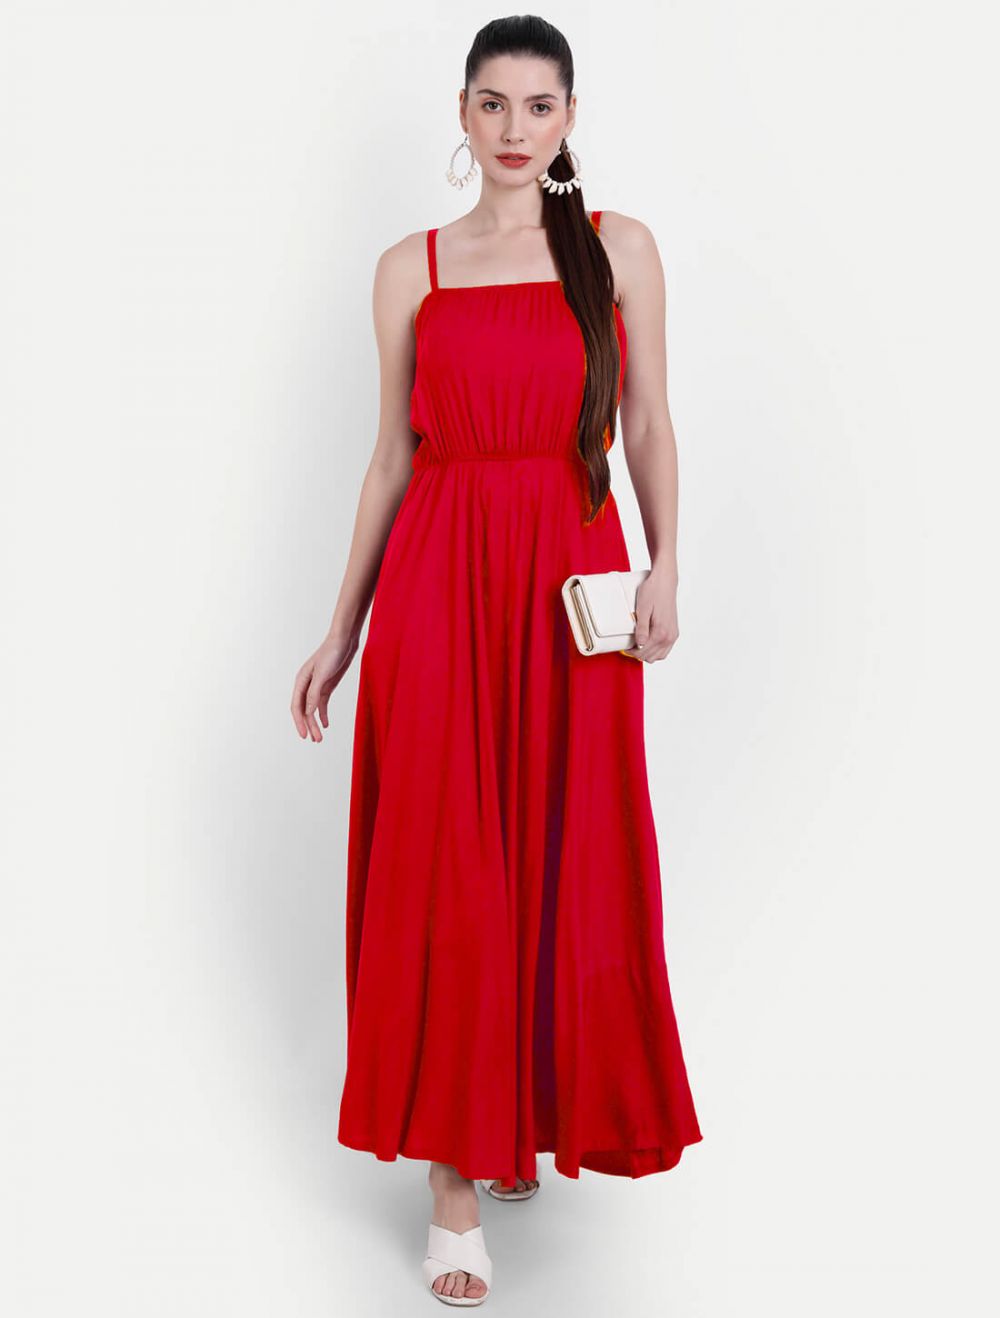 Silk red sleeveless dress (CNY002) - ShopperBoard